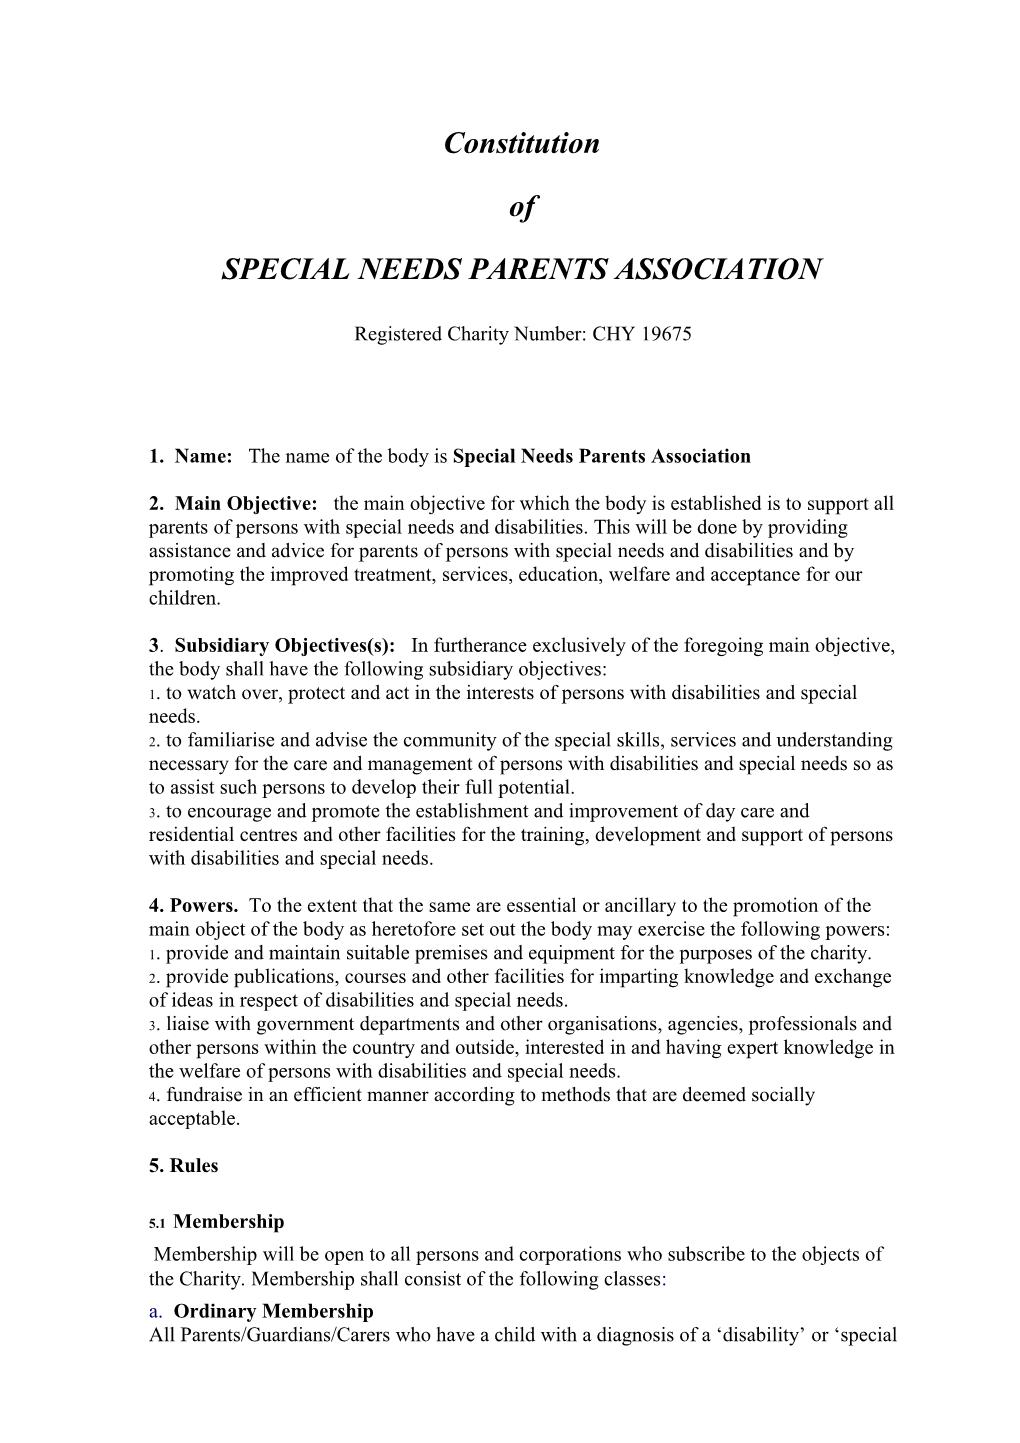 Special Needs Parents Association